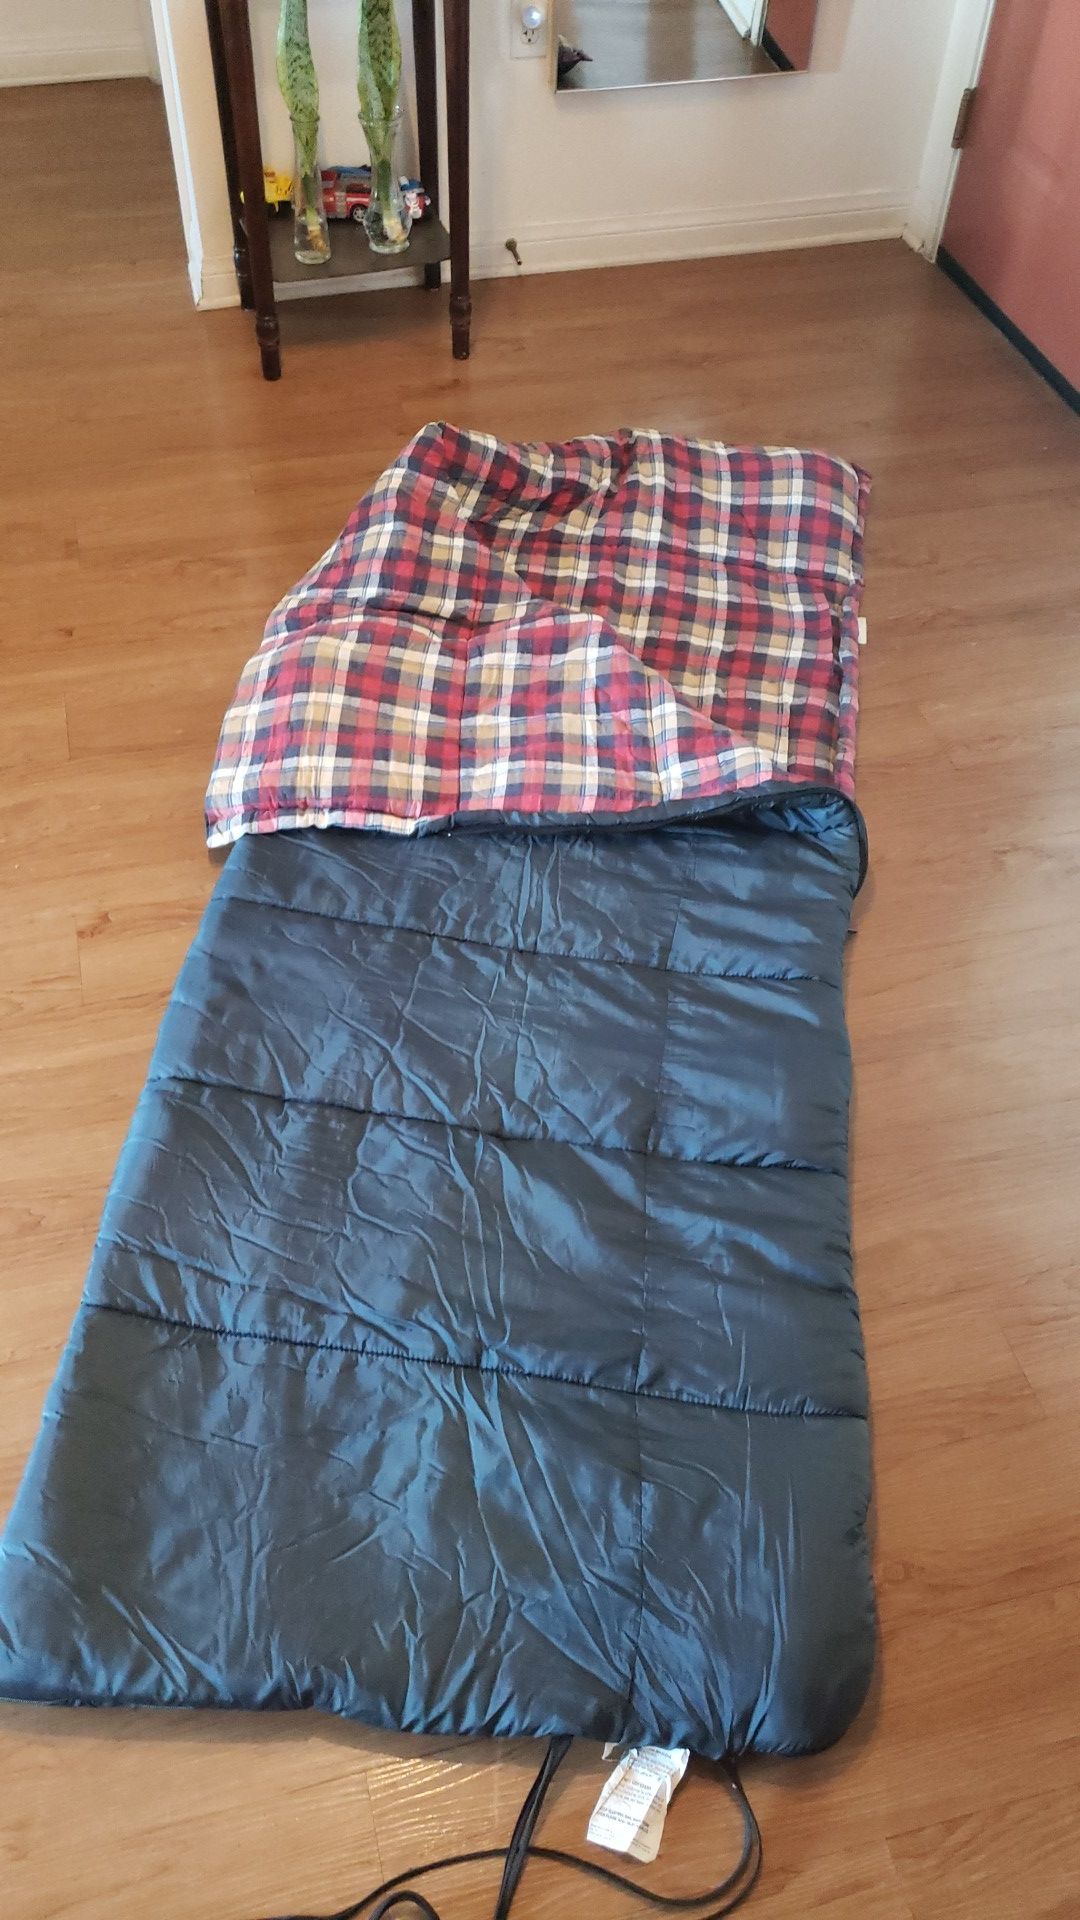 Sleeping bag / bolsa para dormir